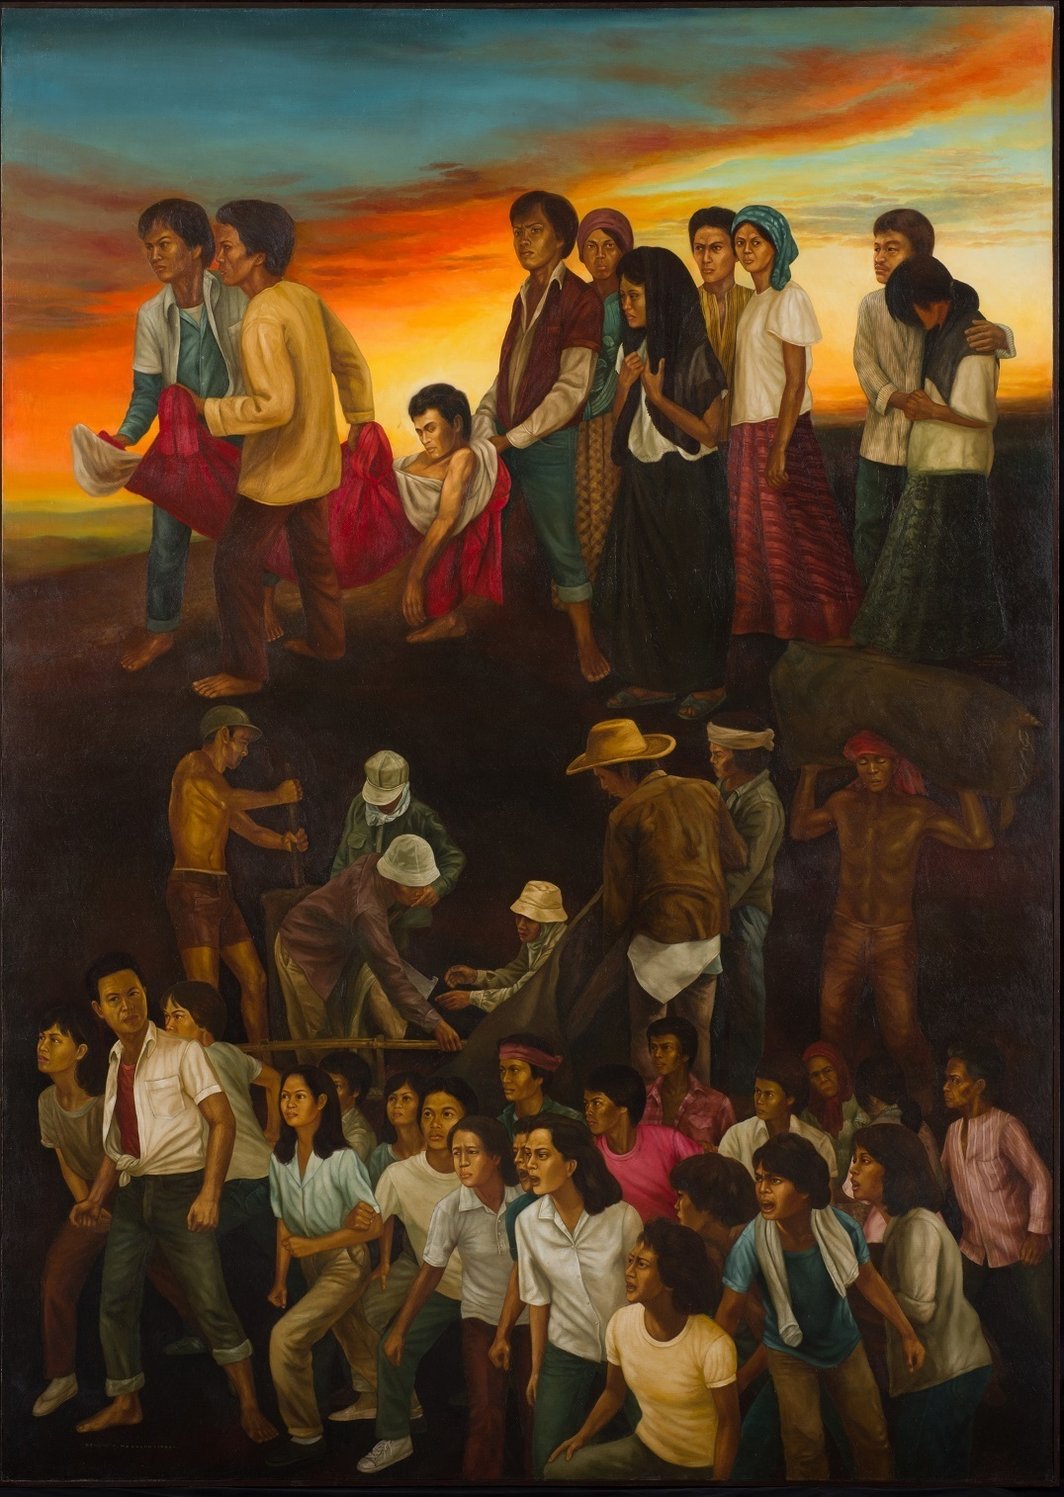 Renato Habulan，《民族剧》，1982，布面油画，213.4 X 152.4cm. 图片提供：新加坡国家美术馆.